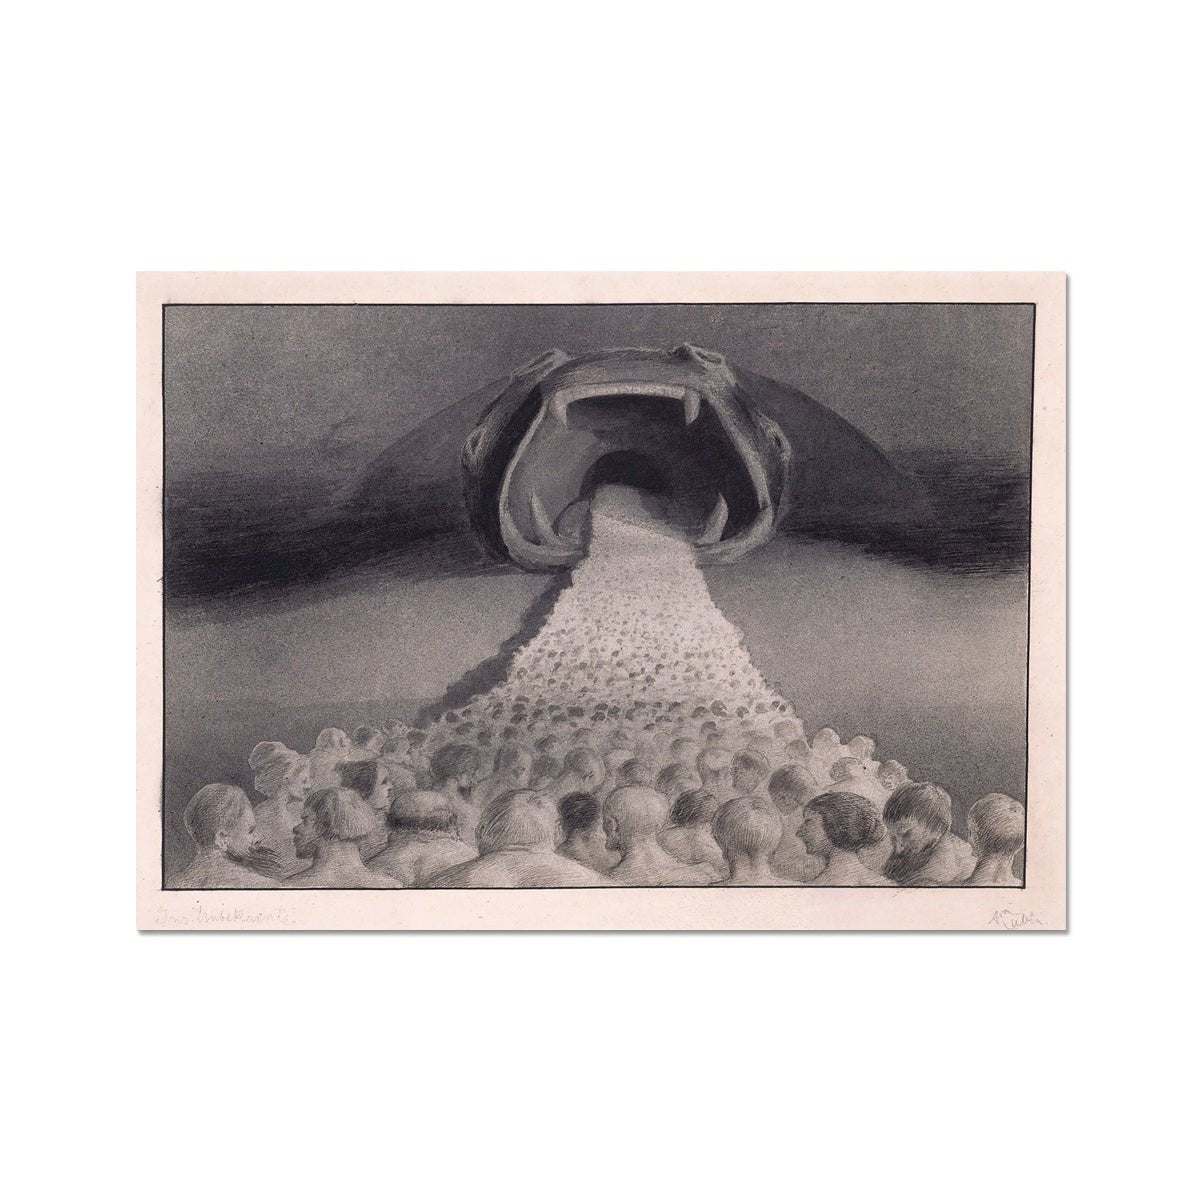 giclee Alfred Kubin, Vers l’inconnu Symbolist Surrealist Gothic Goth Surreal Occult Supernatural Life and Death Decor Vintage Fine Art Print